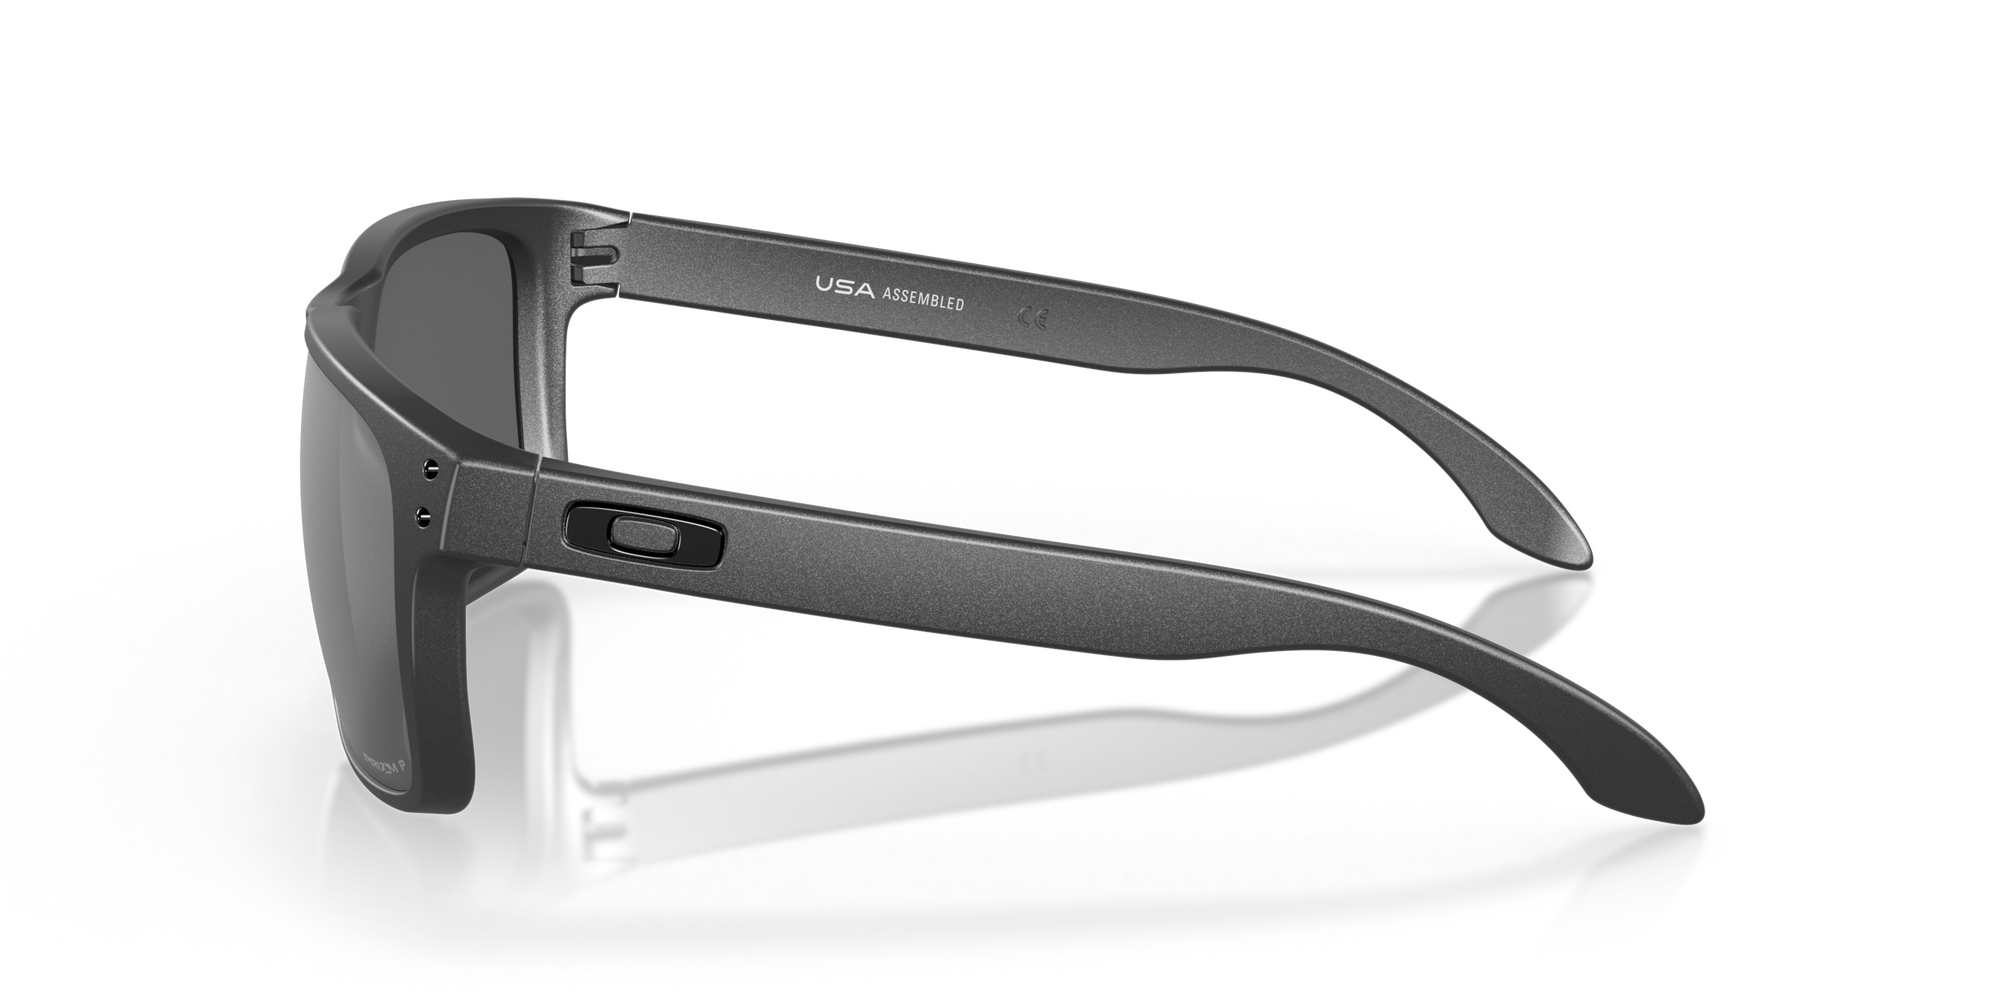 Holbrook XL Sunglasses Steel - Prizm Black Polarized Lens